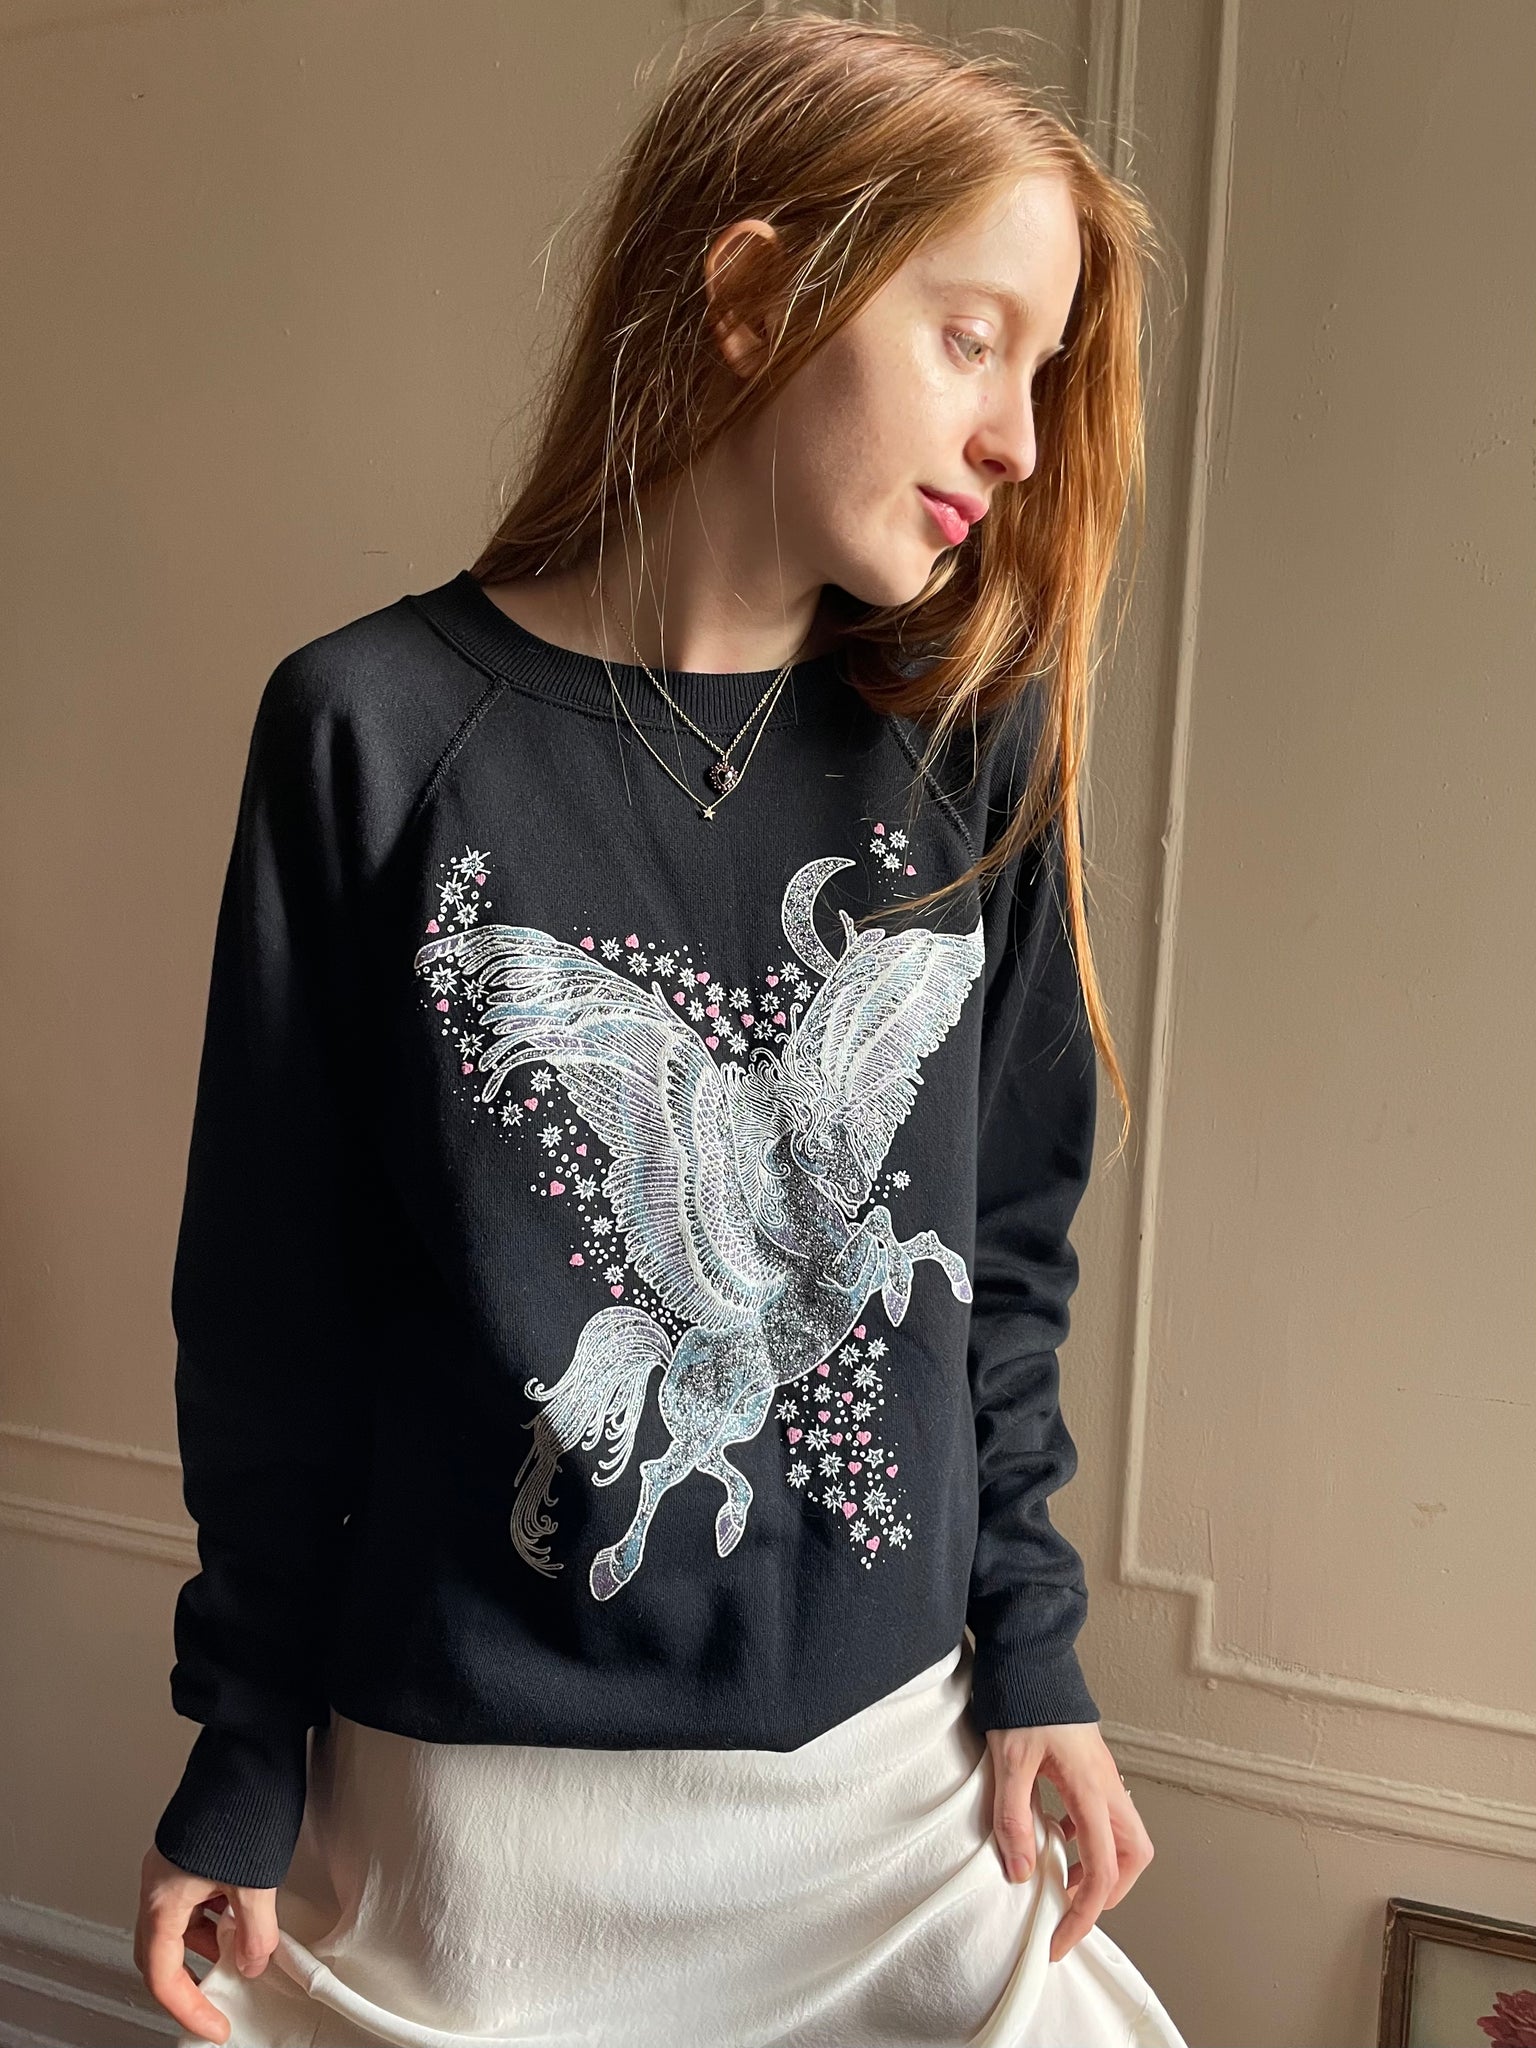 1980s Unicorn Iron on Sparkle Black Sweatshirt